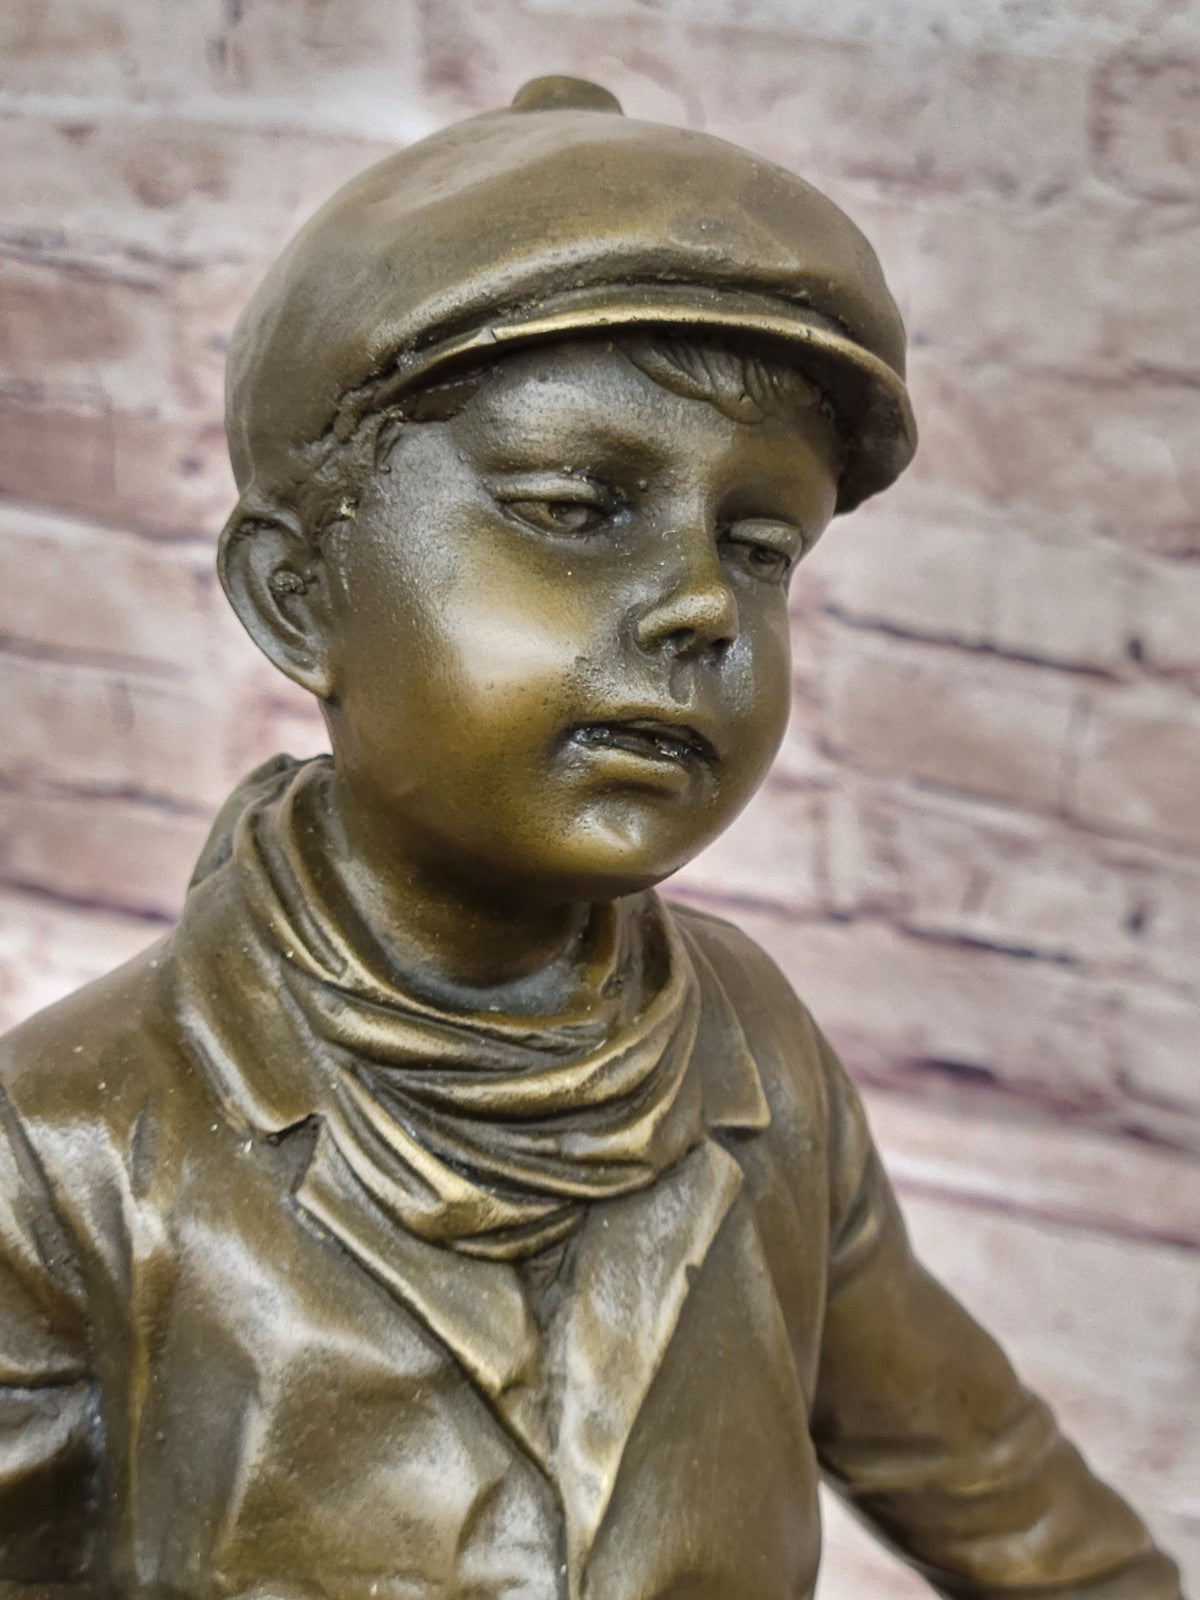 Hand Made Caddy Boy Golfer Bronze Figurine on Marble Base - Signed Artwork